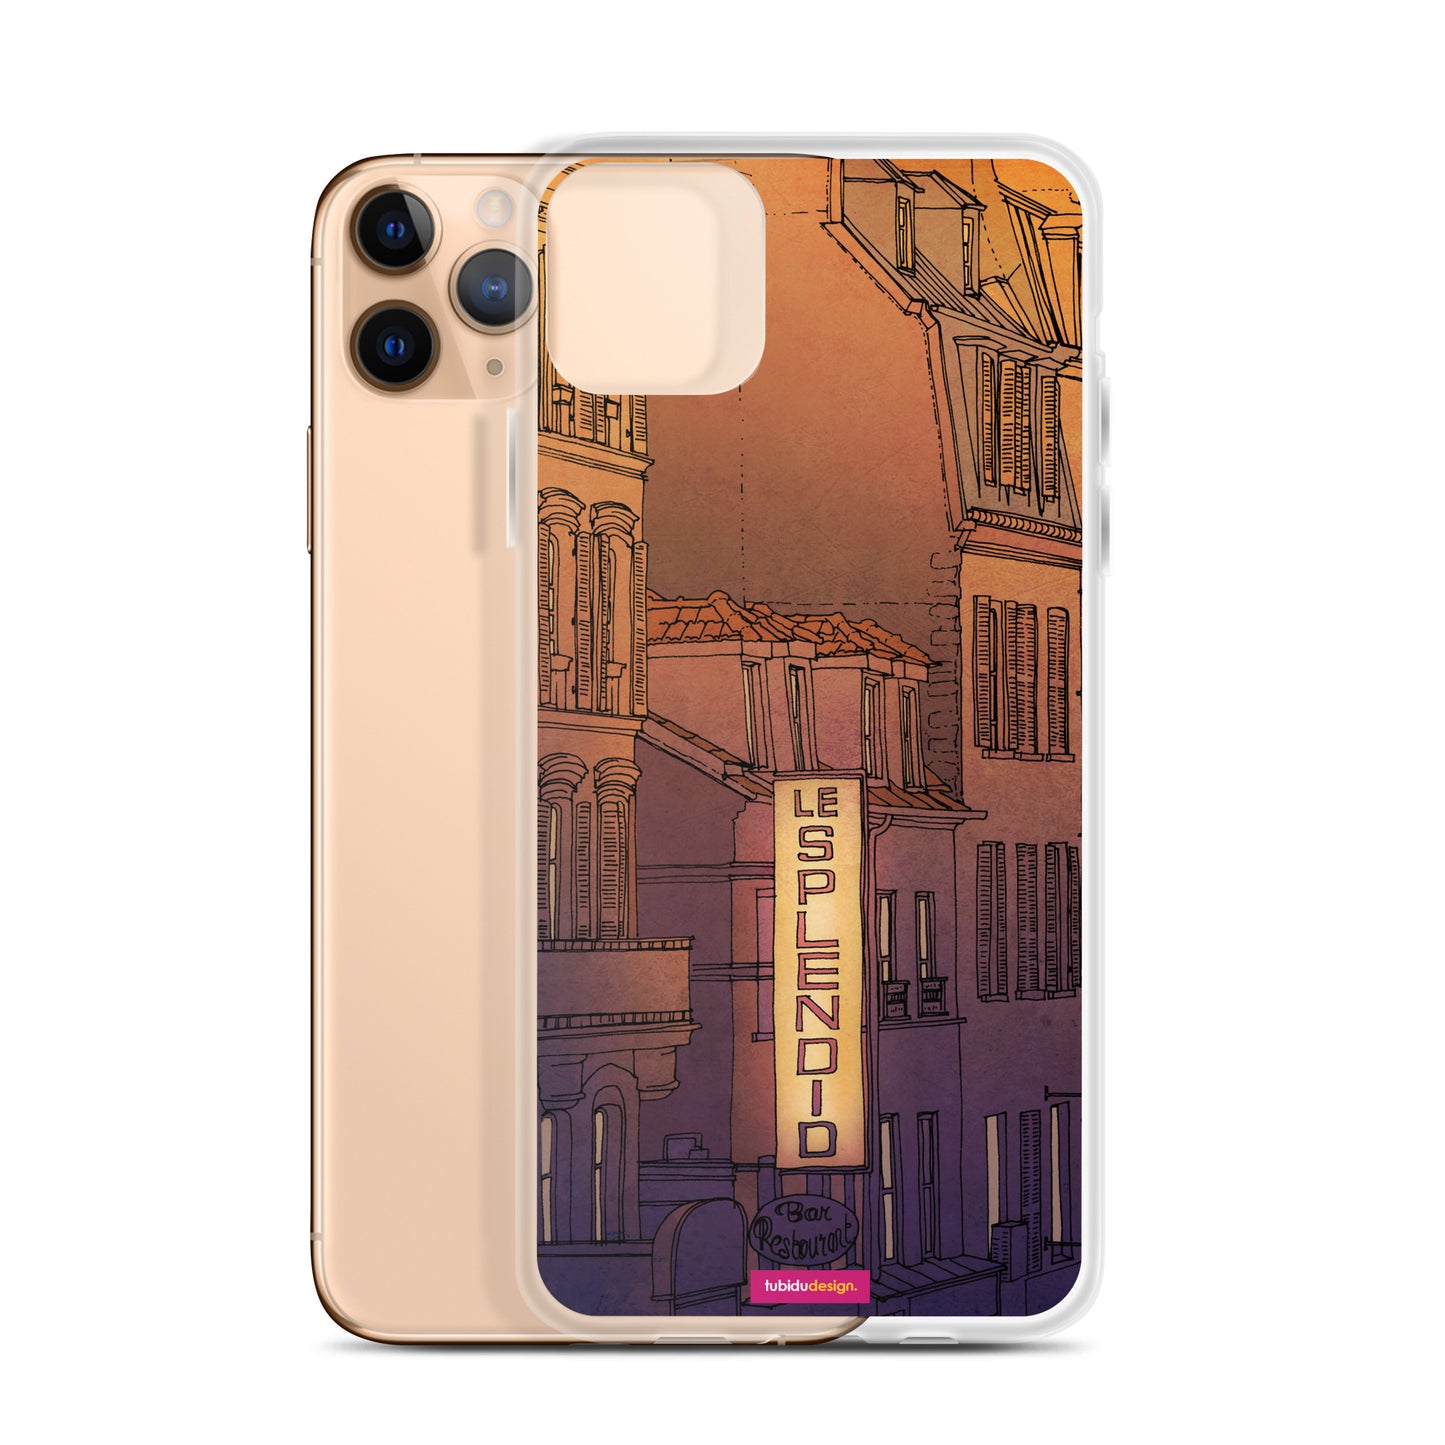 Good morning Paris (light purple) - Illustrated iPhone Case